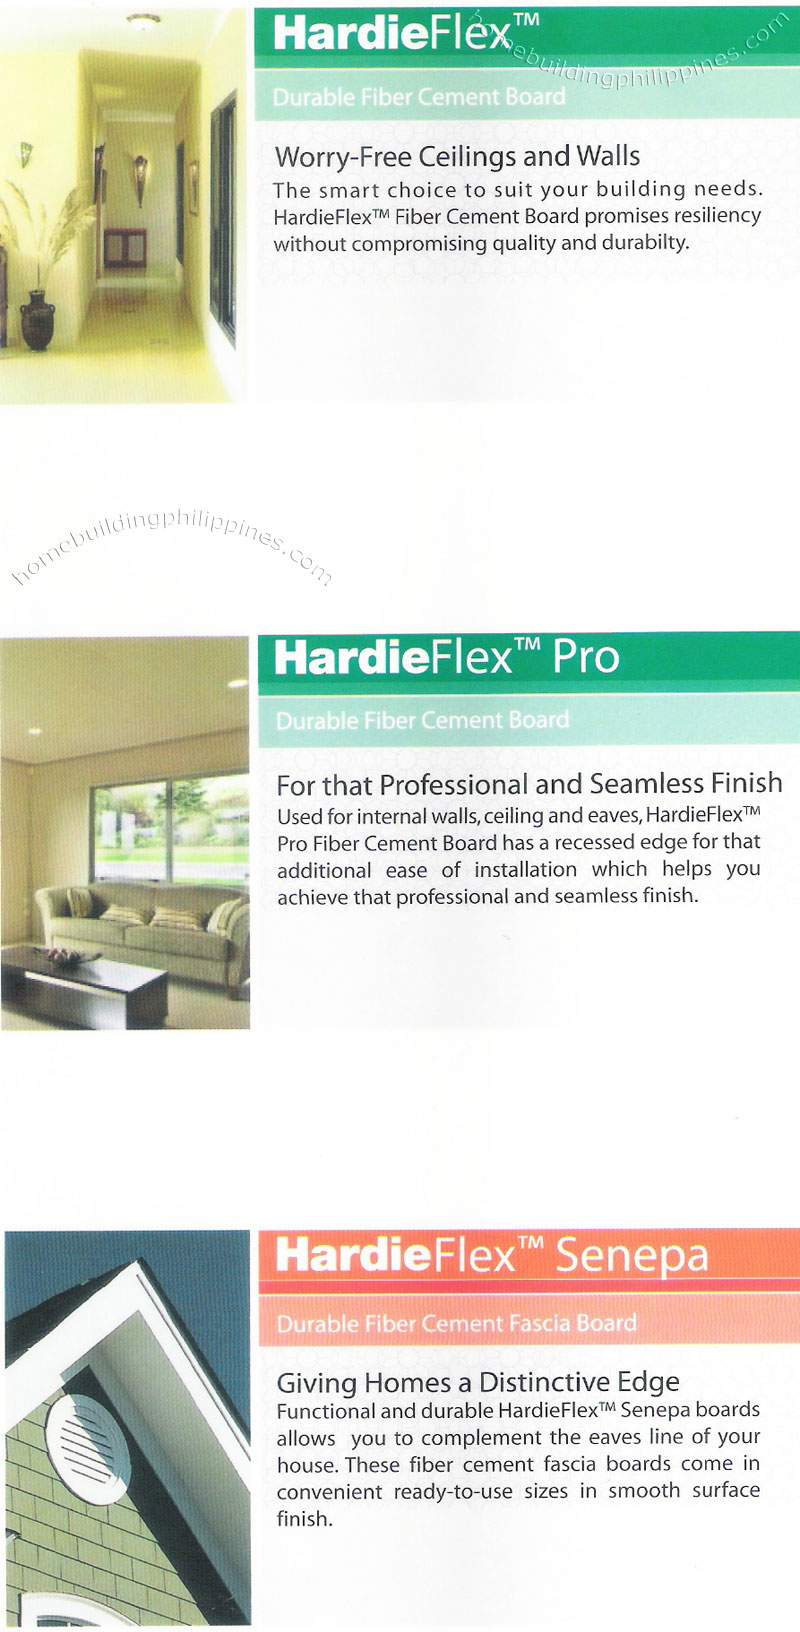 HardieFlex, HardieFlex Pro, HardieFlex Senepa